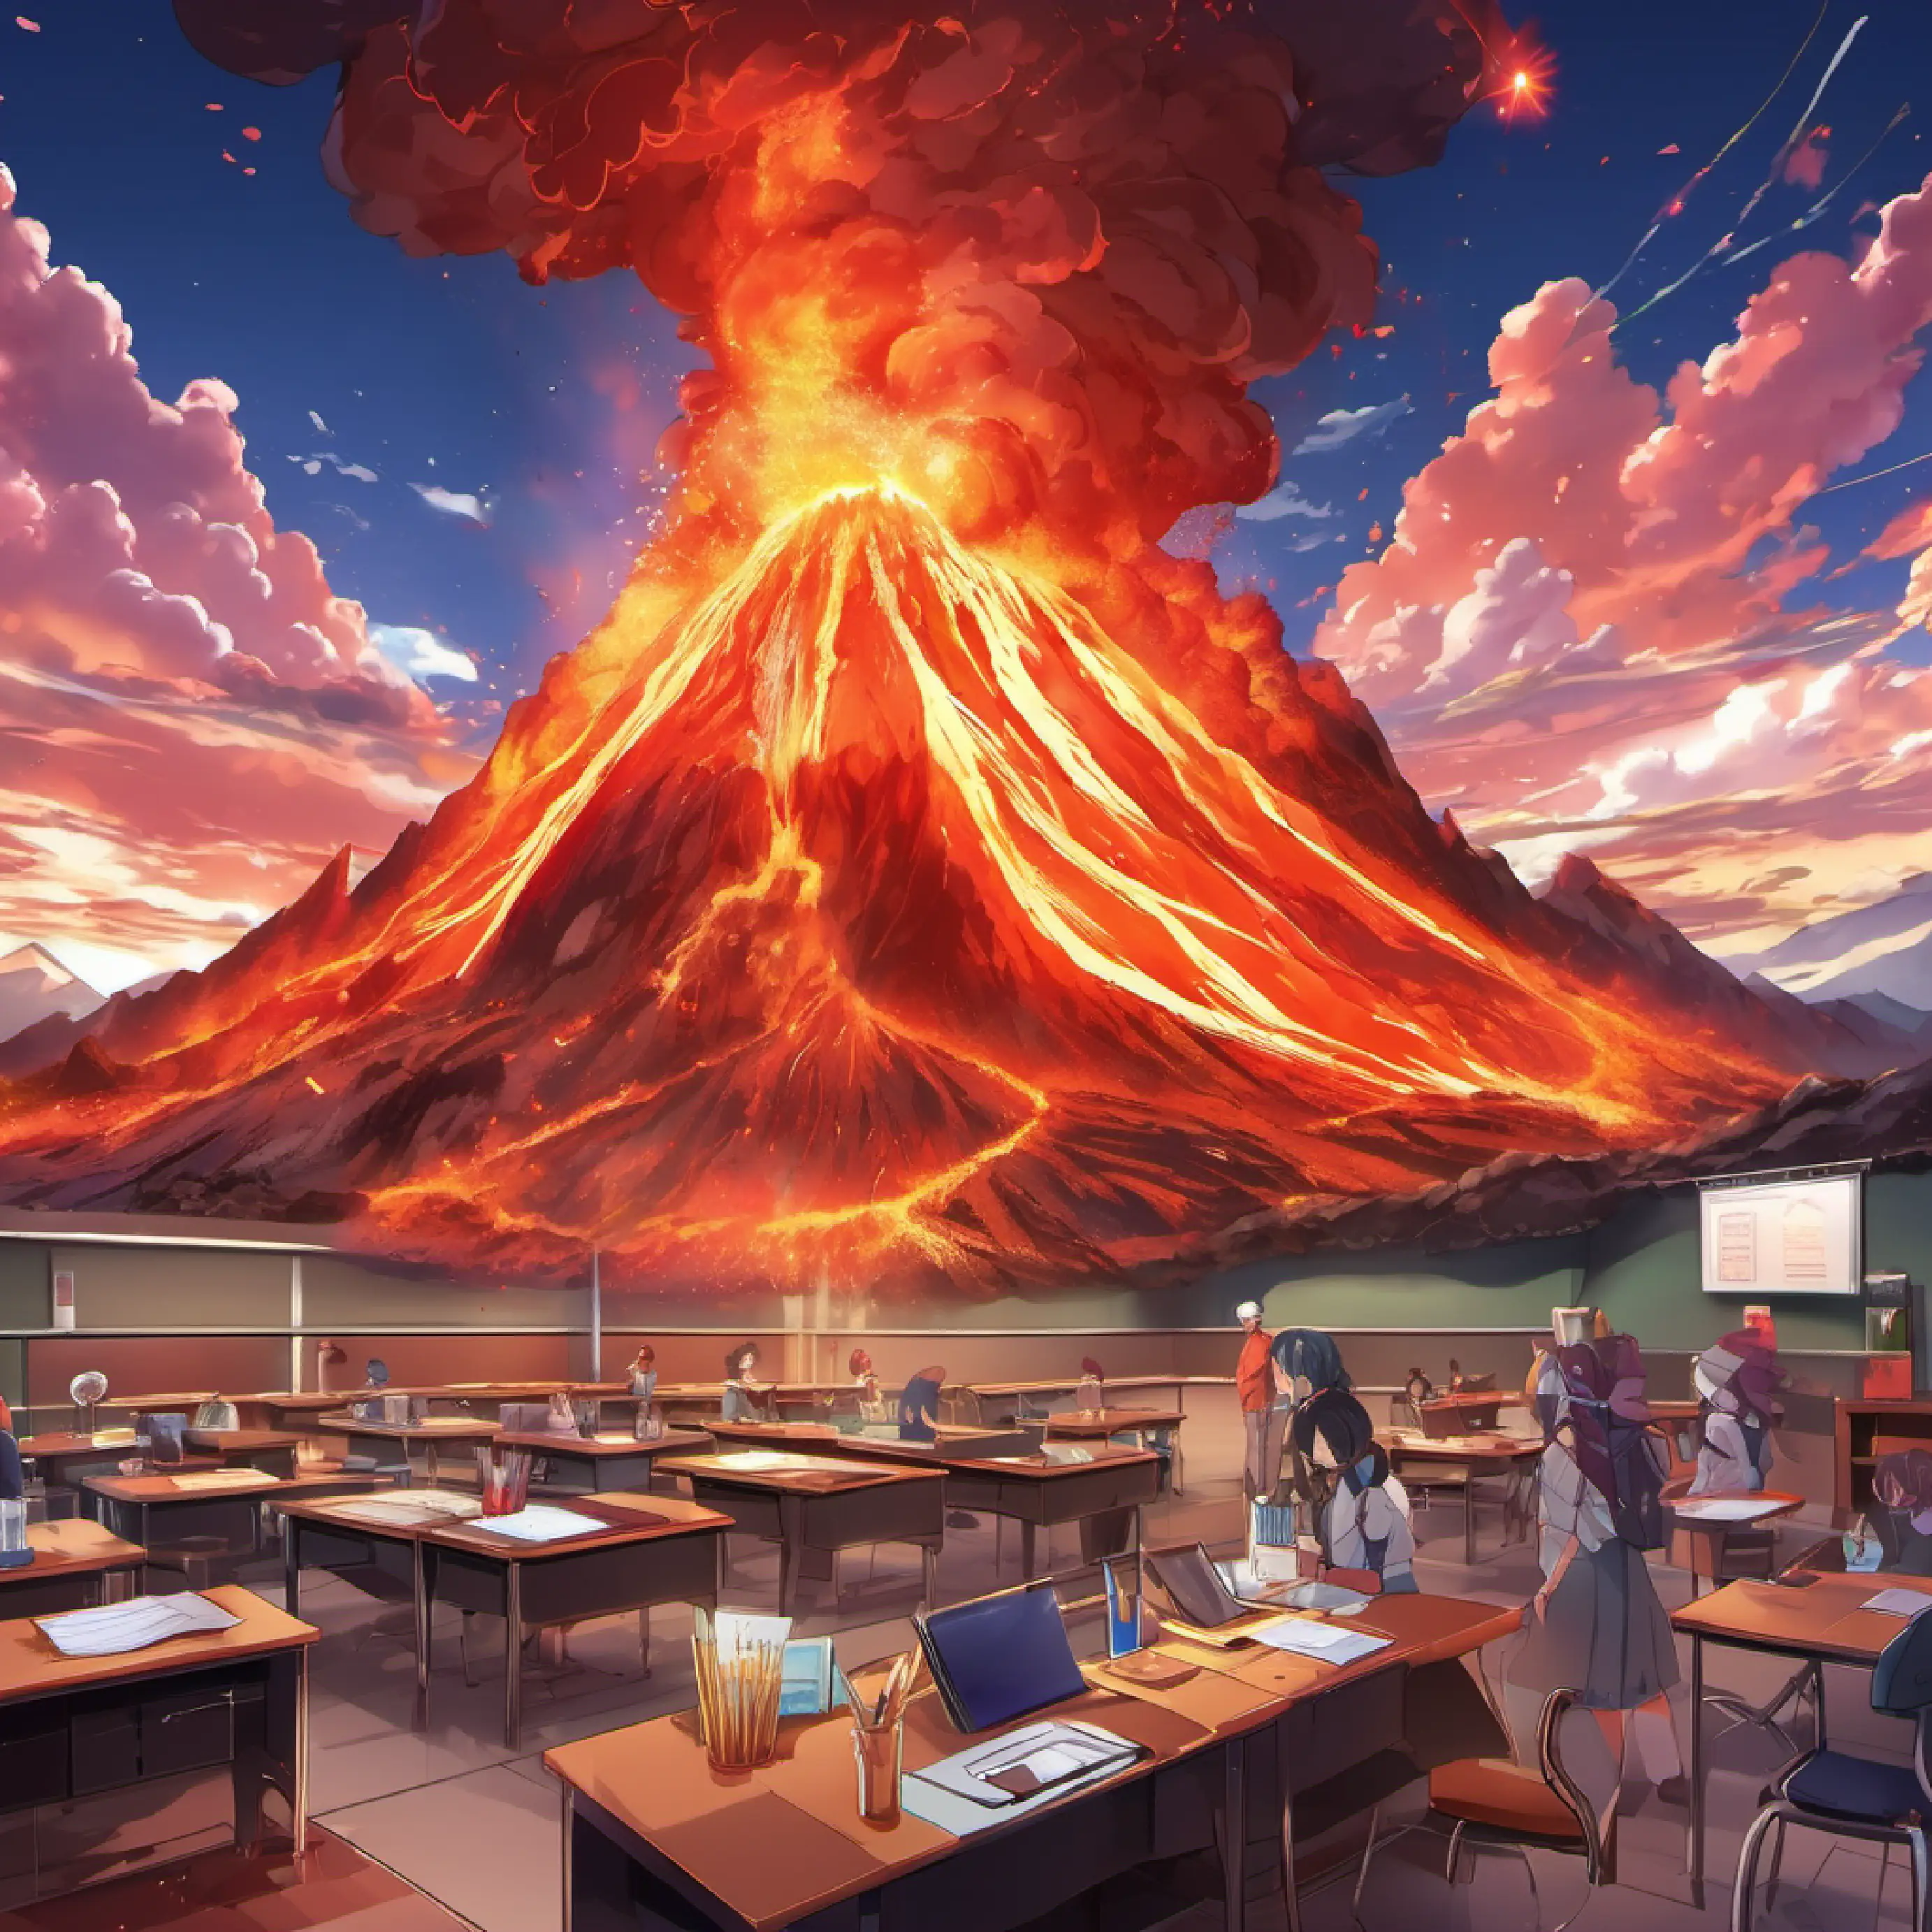 Classroom, science experiment, volcanic eruption